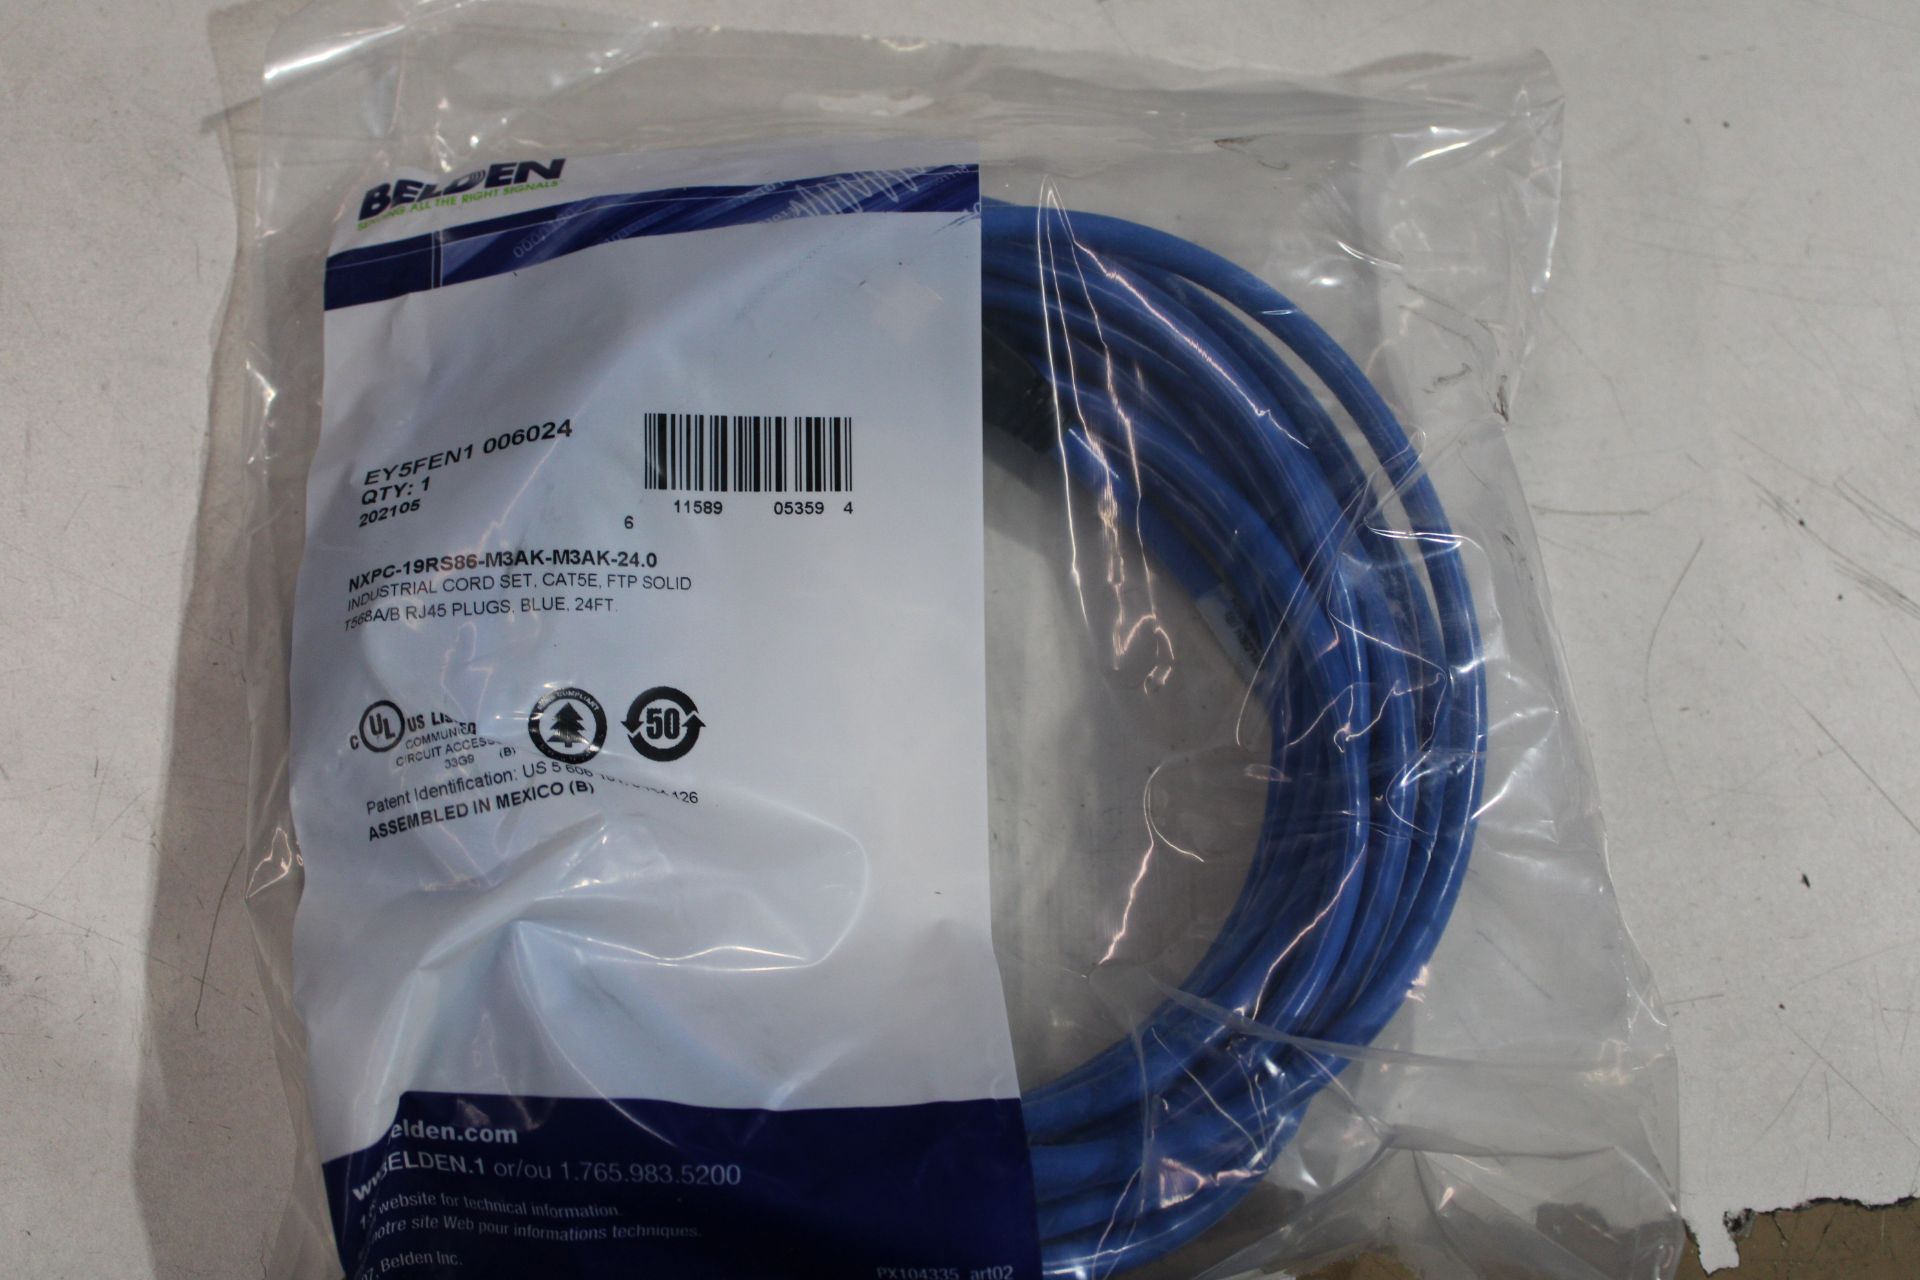 38x Belden EY5FEN1-006011 Wire/Cable/Cord EA